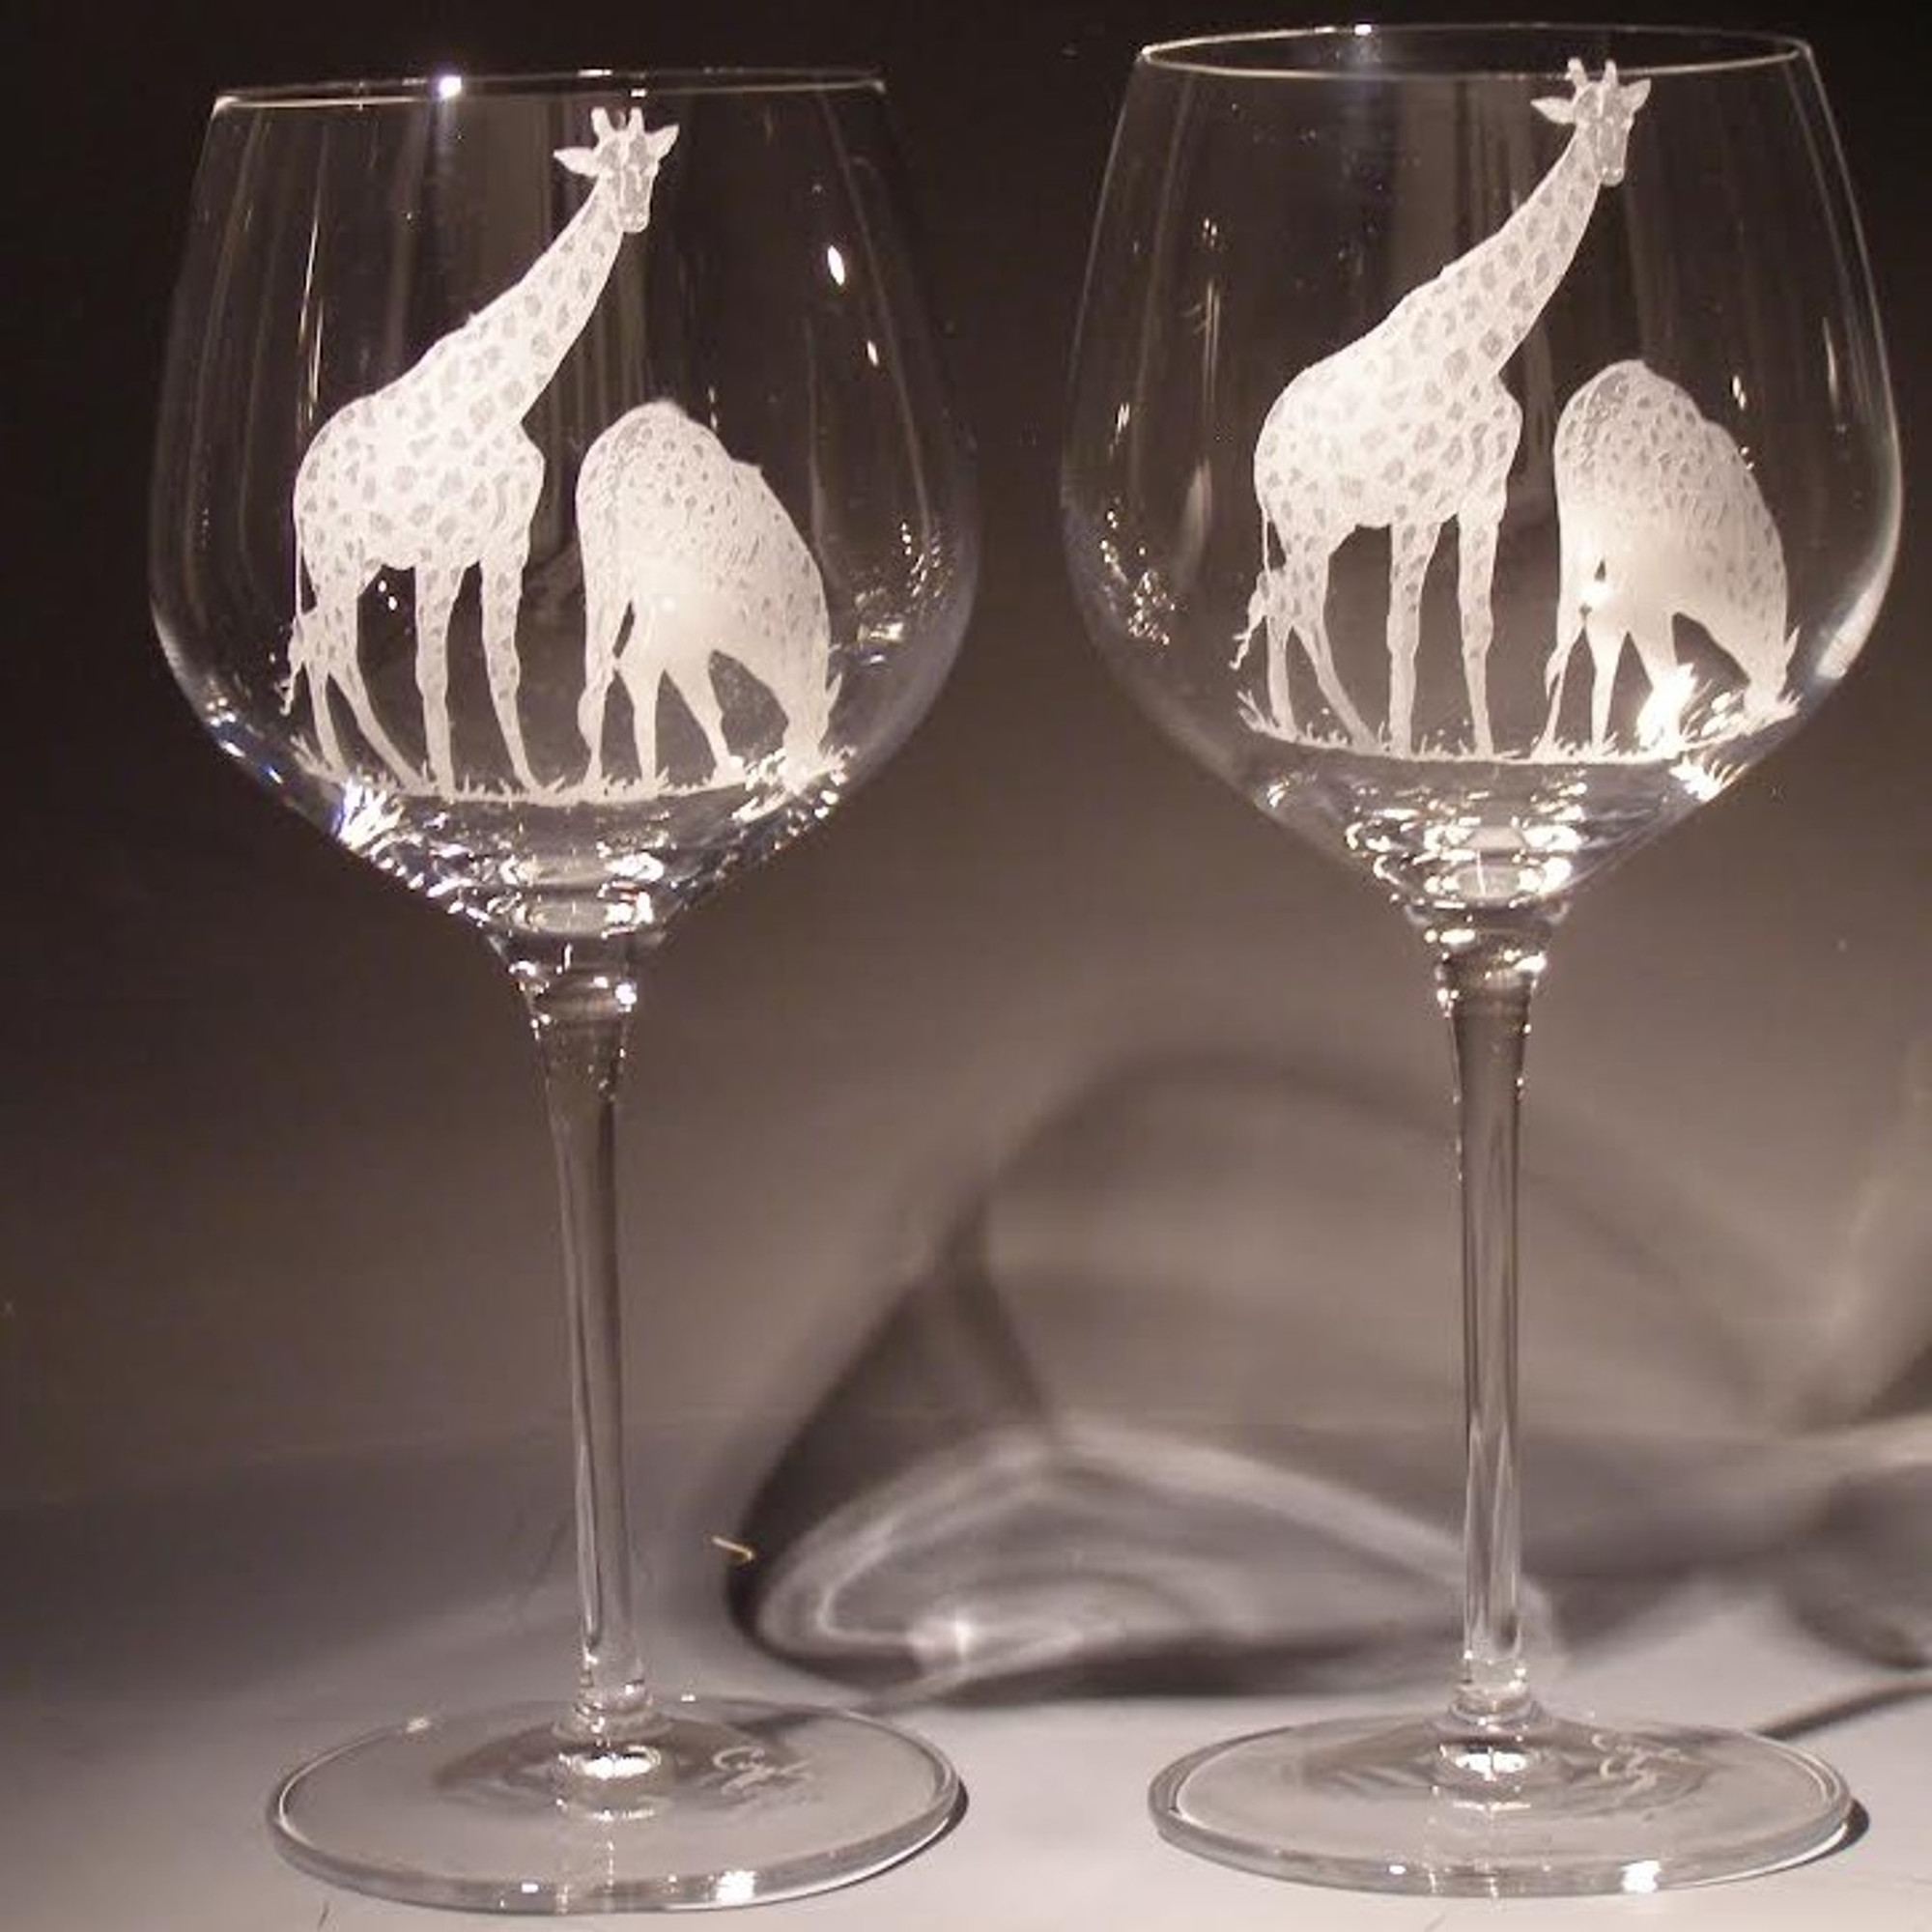 Cute Giraffe Glasses Stemless Wine Glass